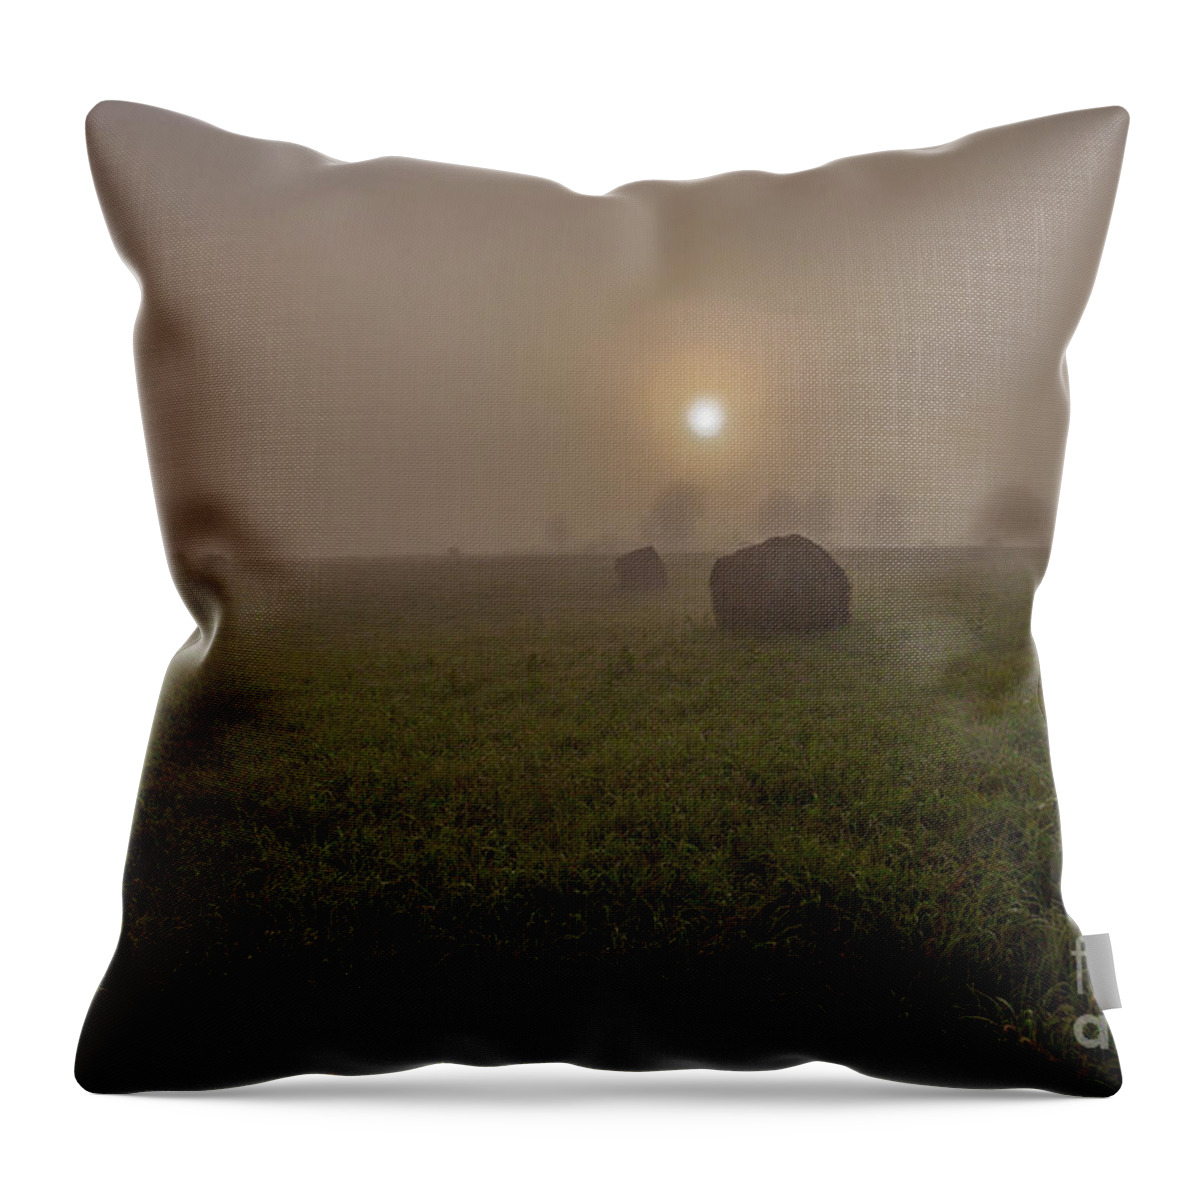 Addington Throw Pillow featuring the photograph Ontario Highlands Dawn by Roger Monahan